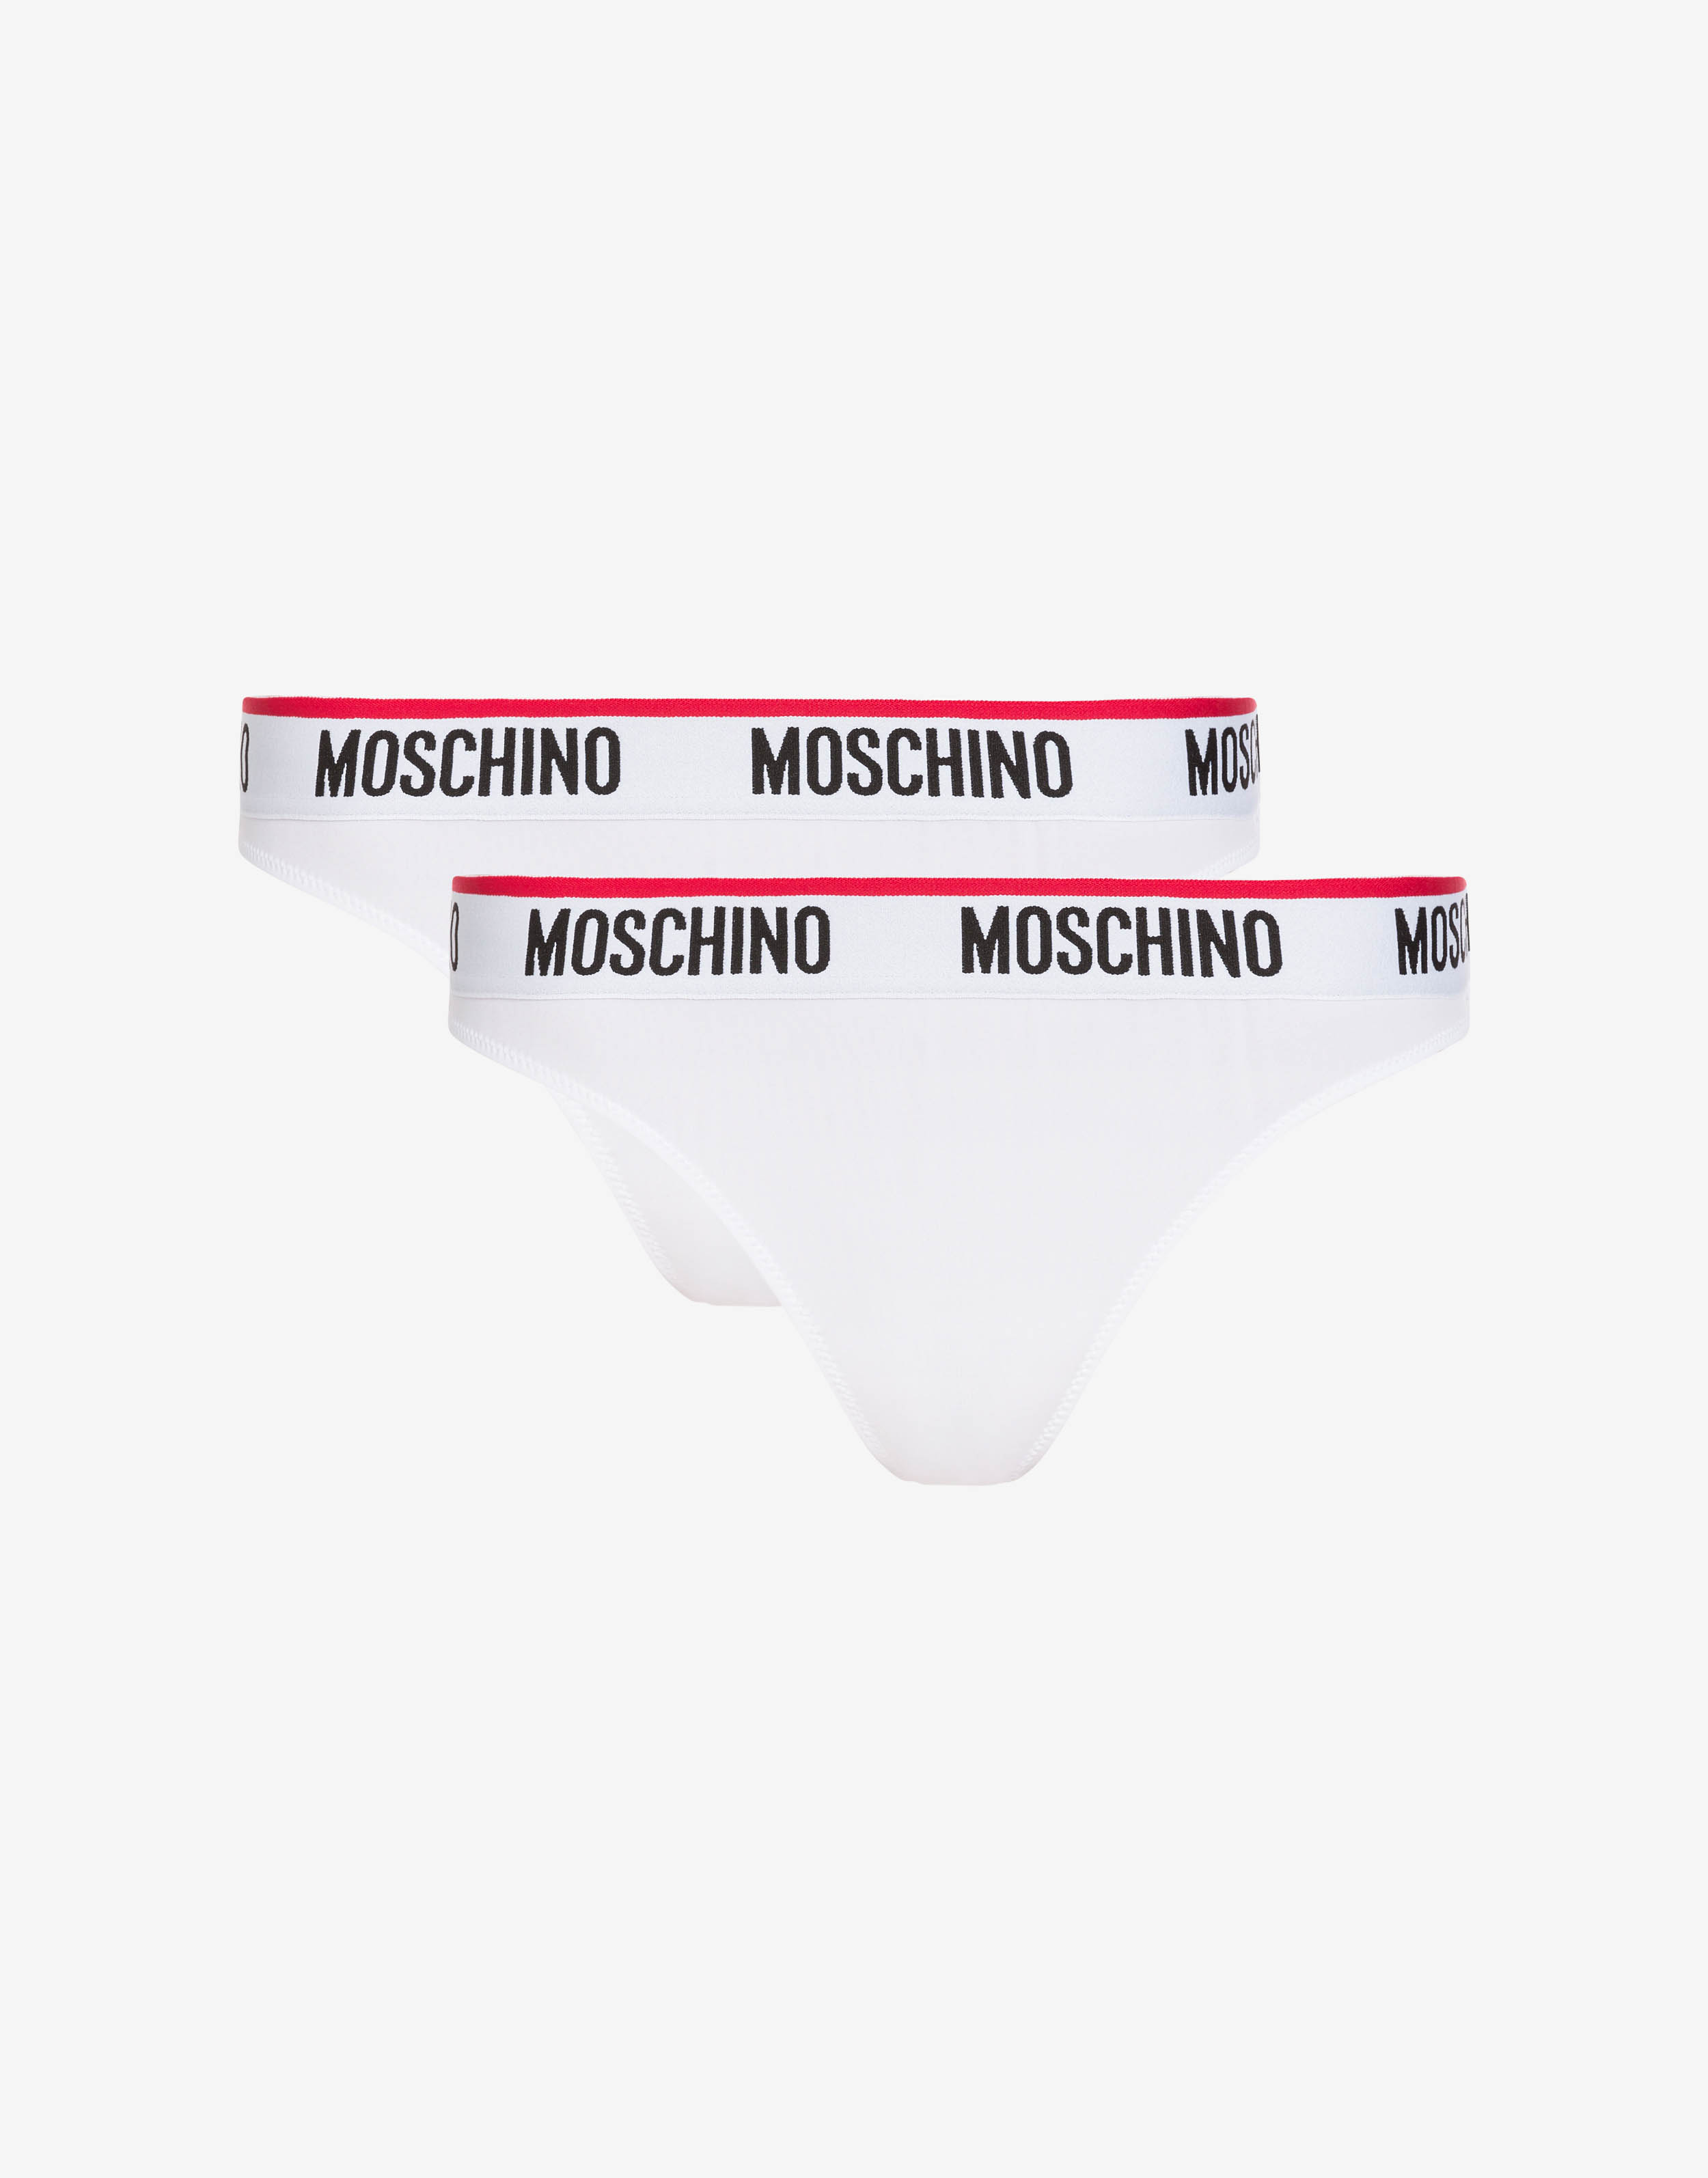 Moschino Clothing Women  Moschino Official Store